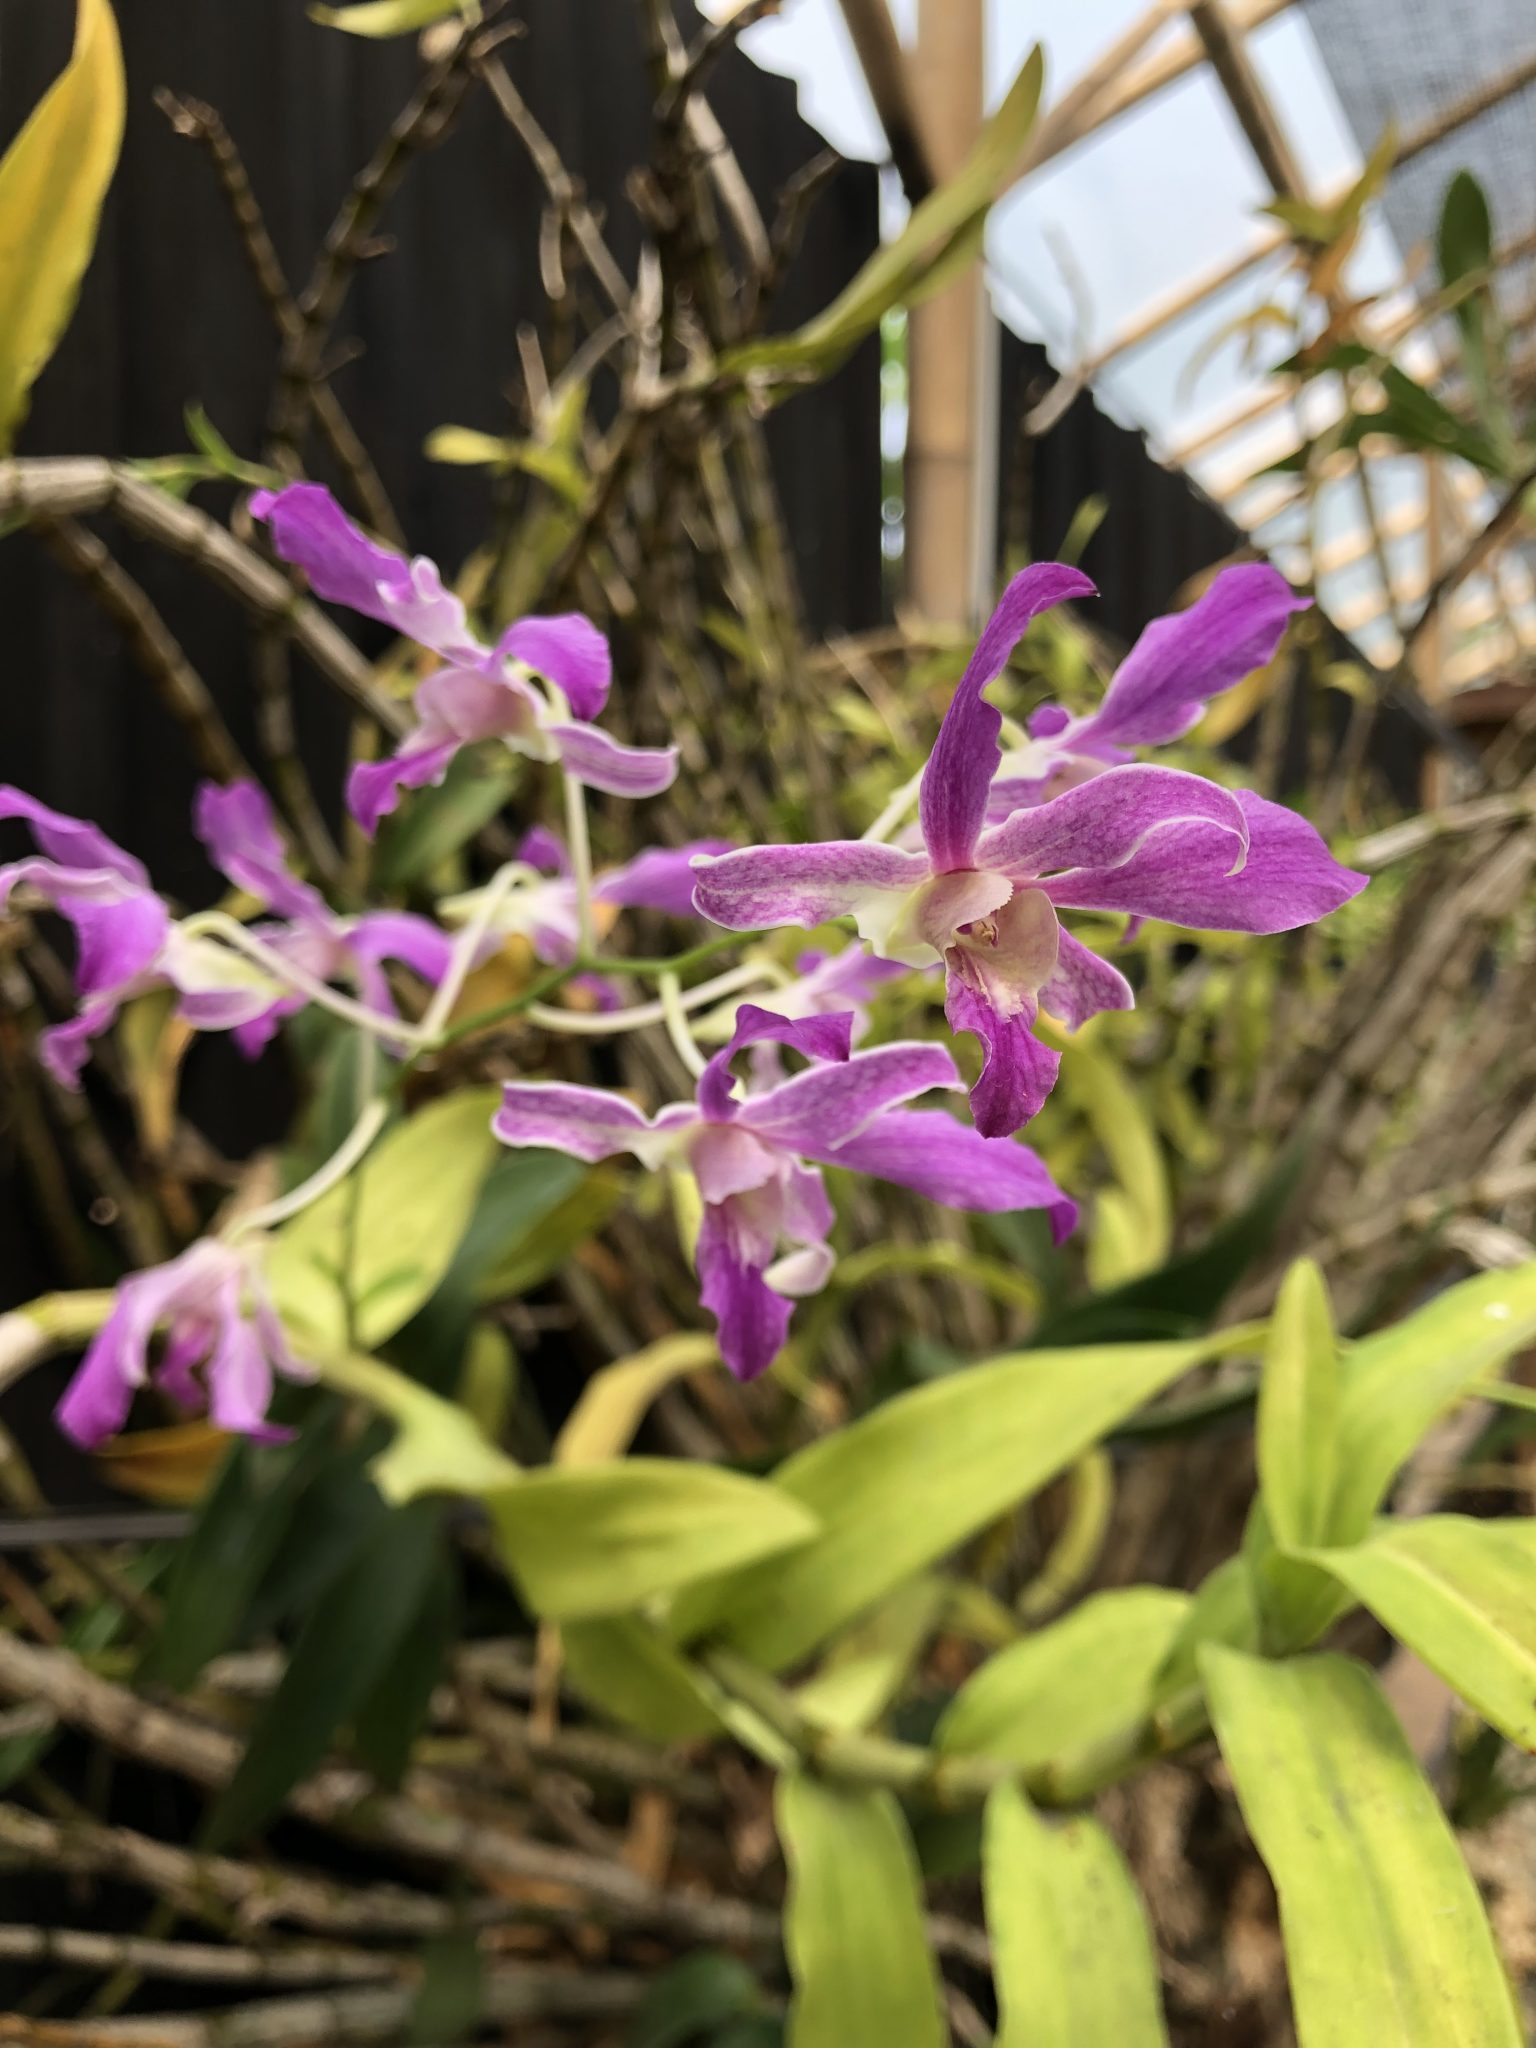 Blooming keiki dendrobium orchid.